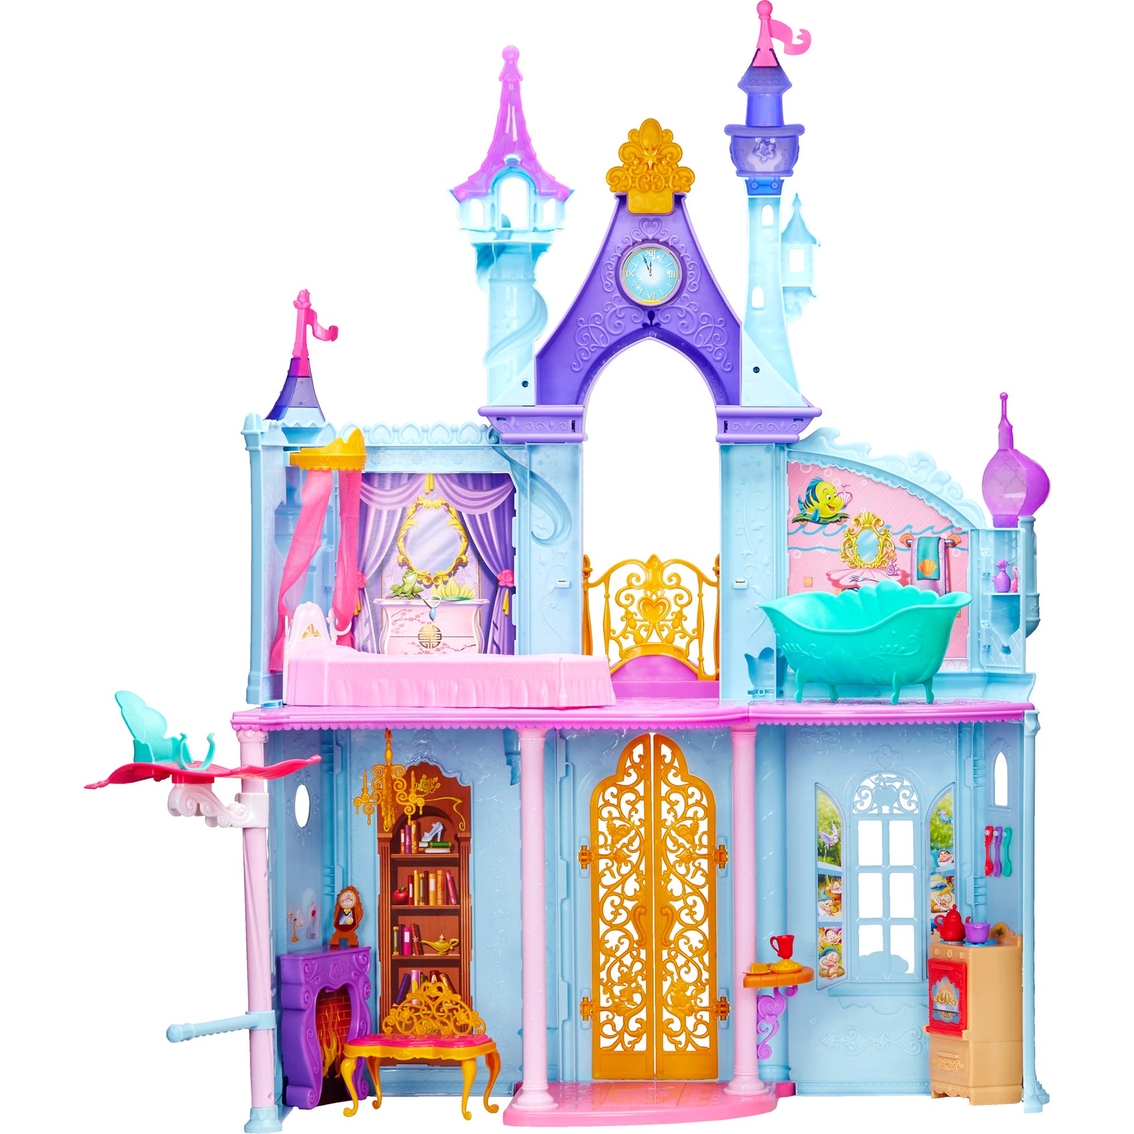 Hasbro Disney Princess Royal Dreams Castle 21 pc. Set - Image 2 of 4